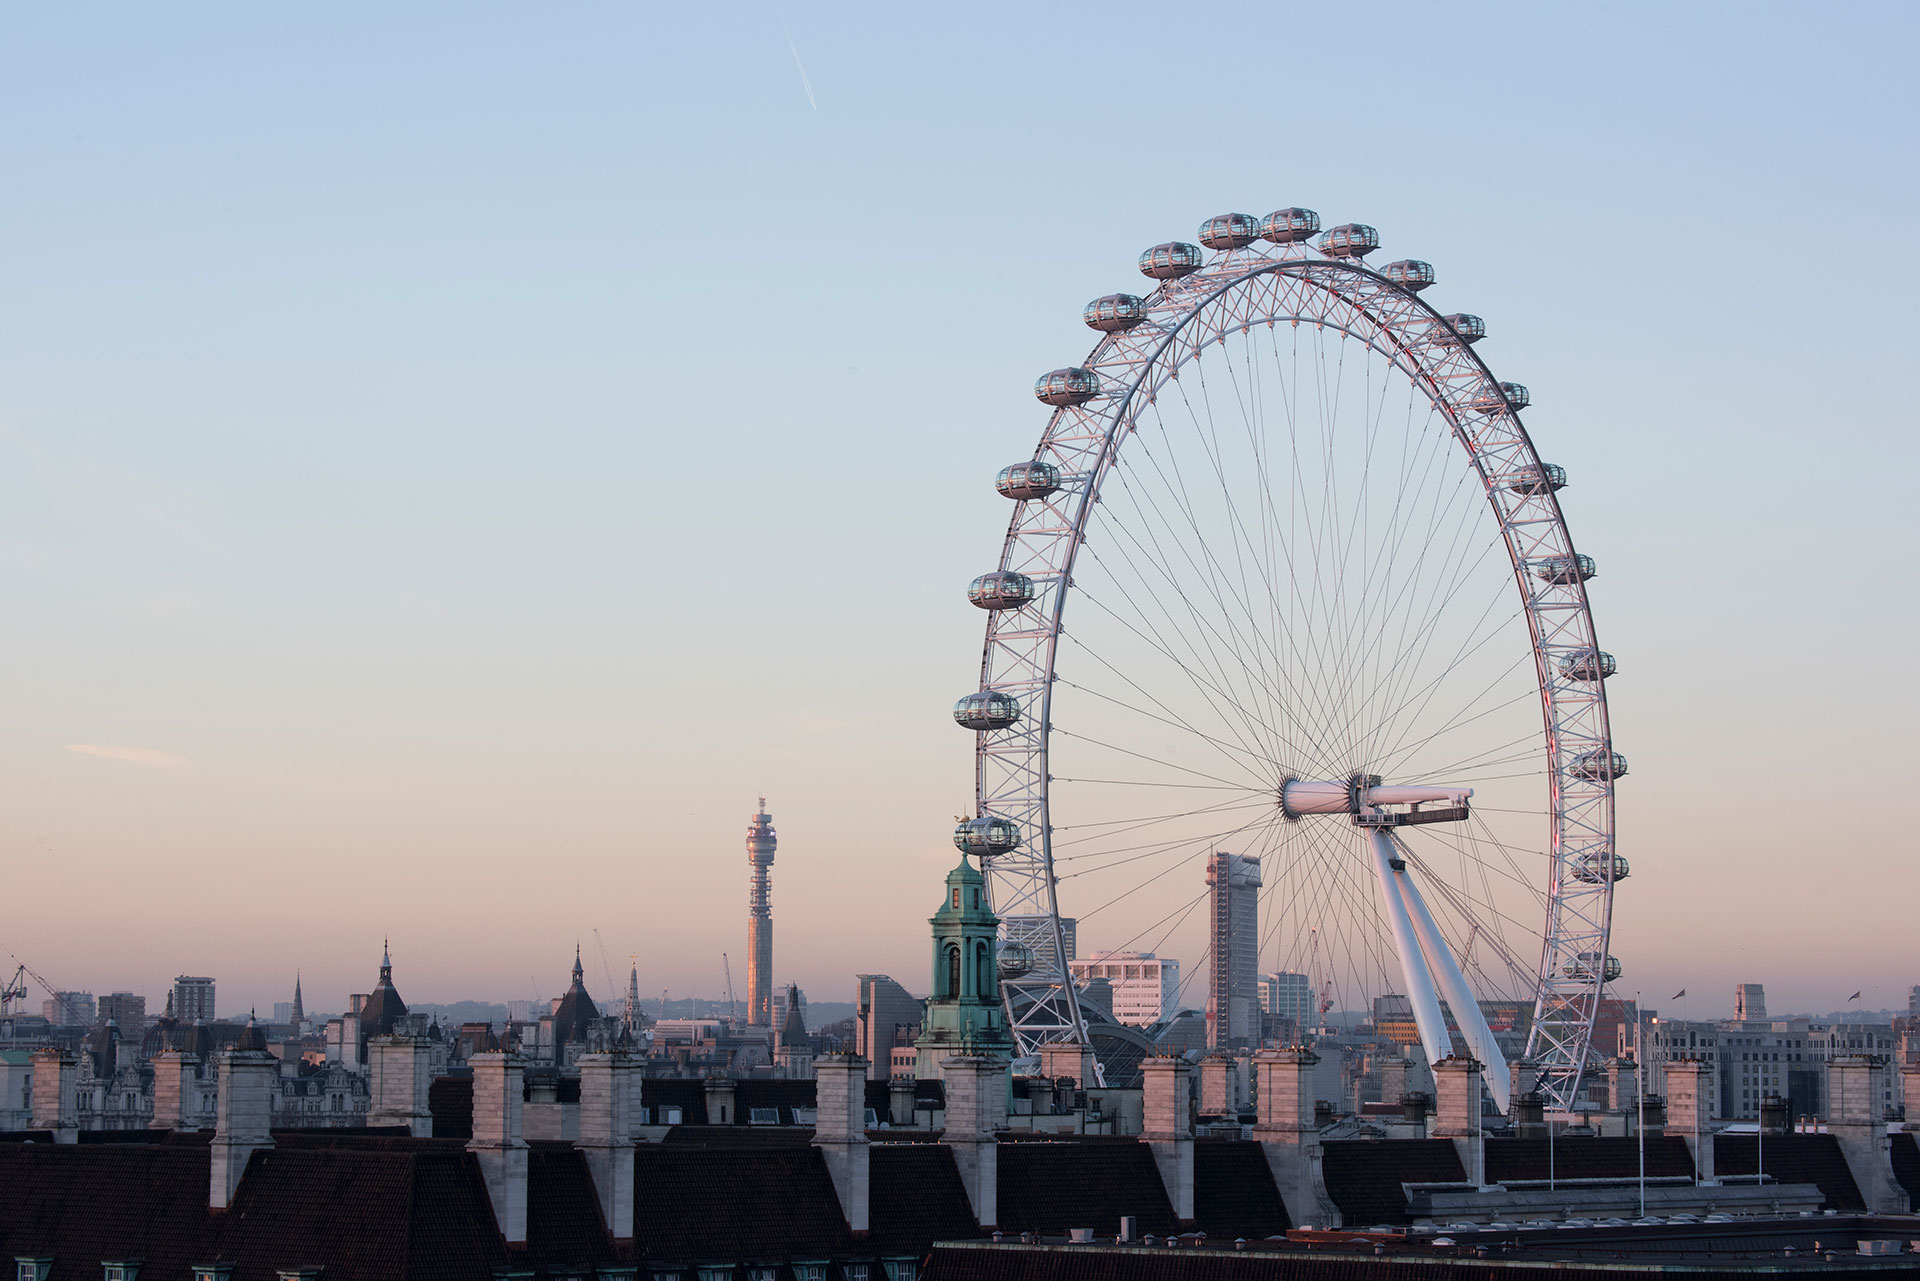 London skyline featuring the London Eye